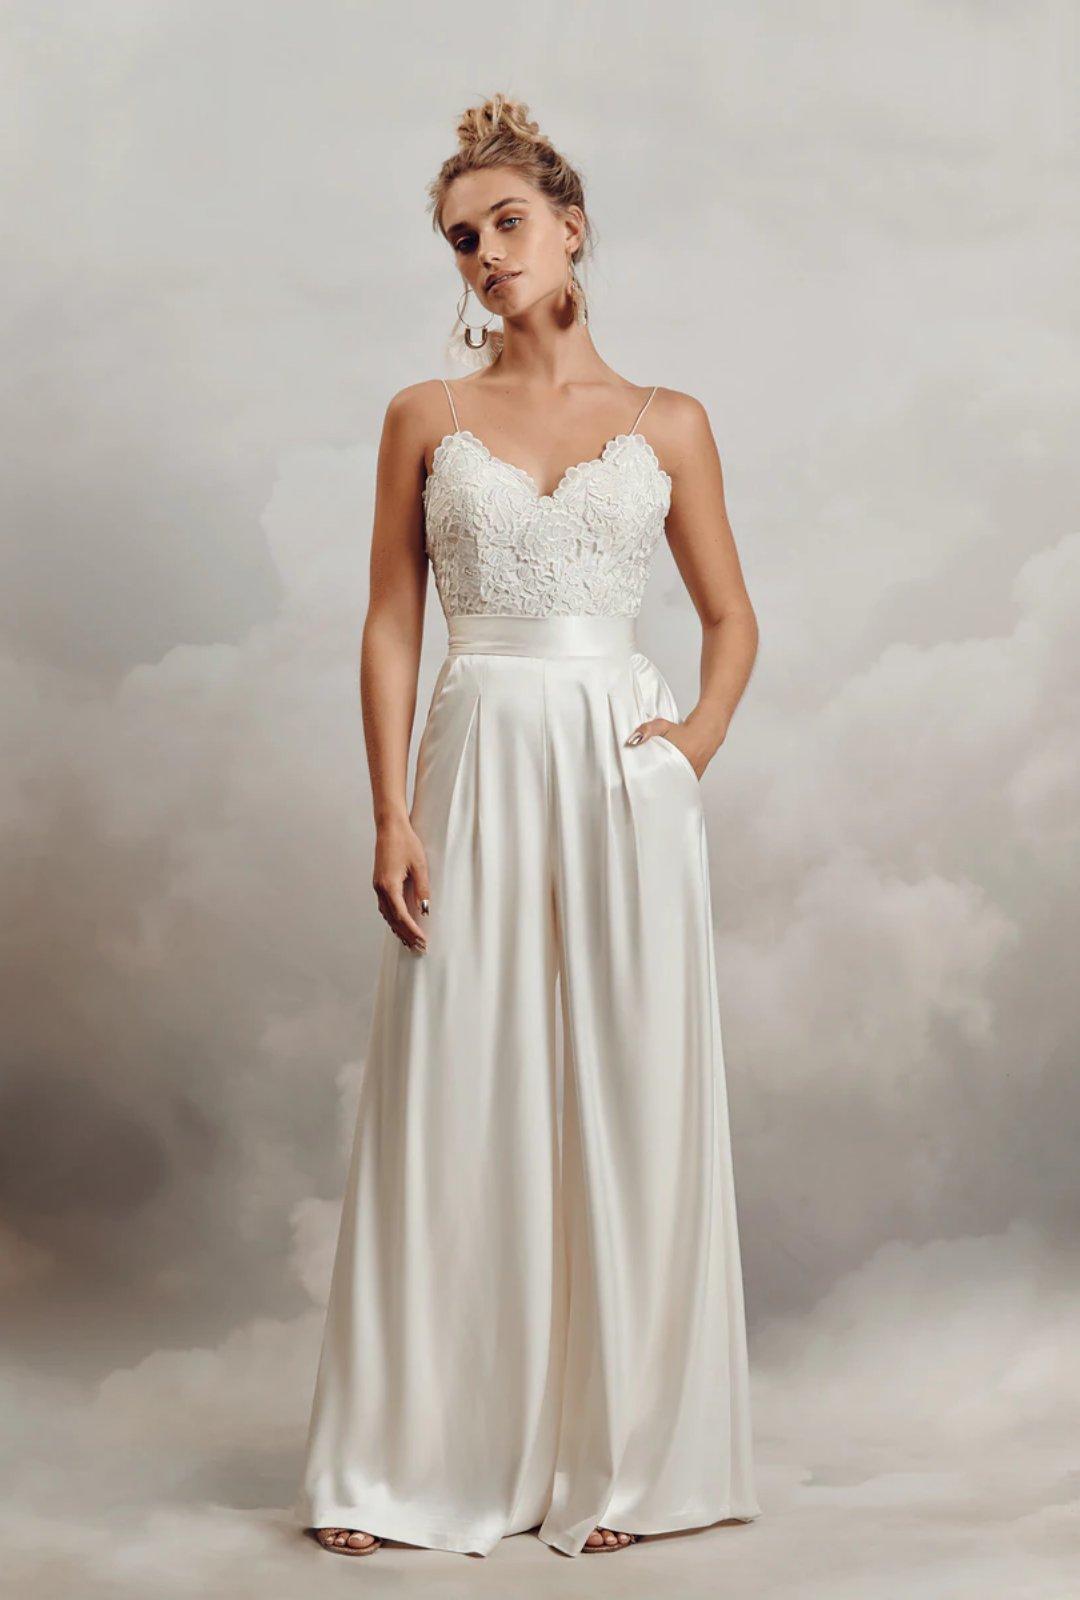 38 Best Courthouse Wedding Dresses & Sets for a Civil Ceremony | Vogue